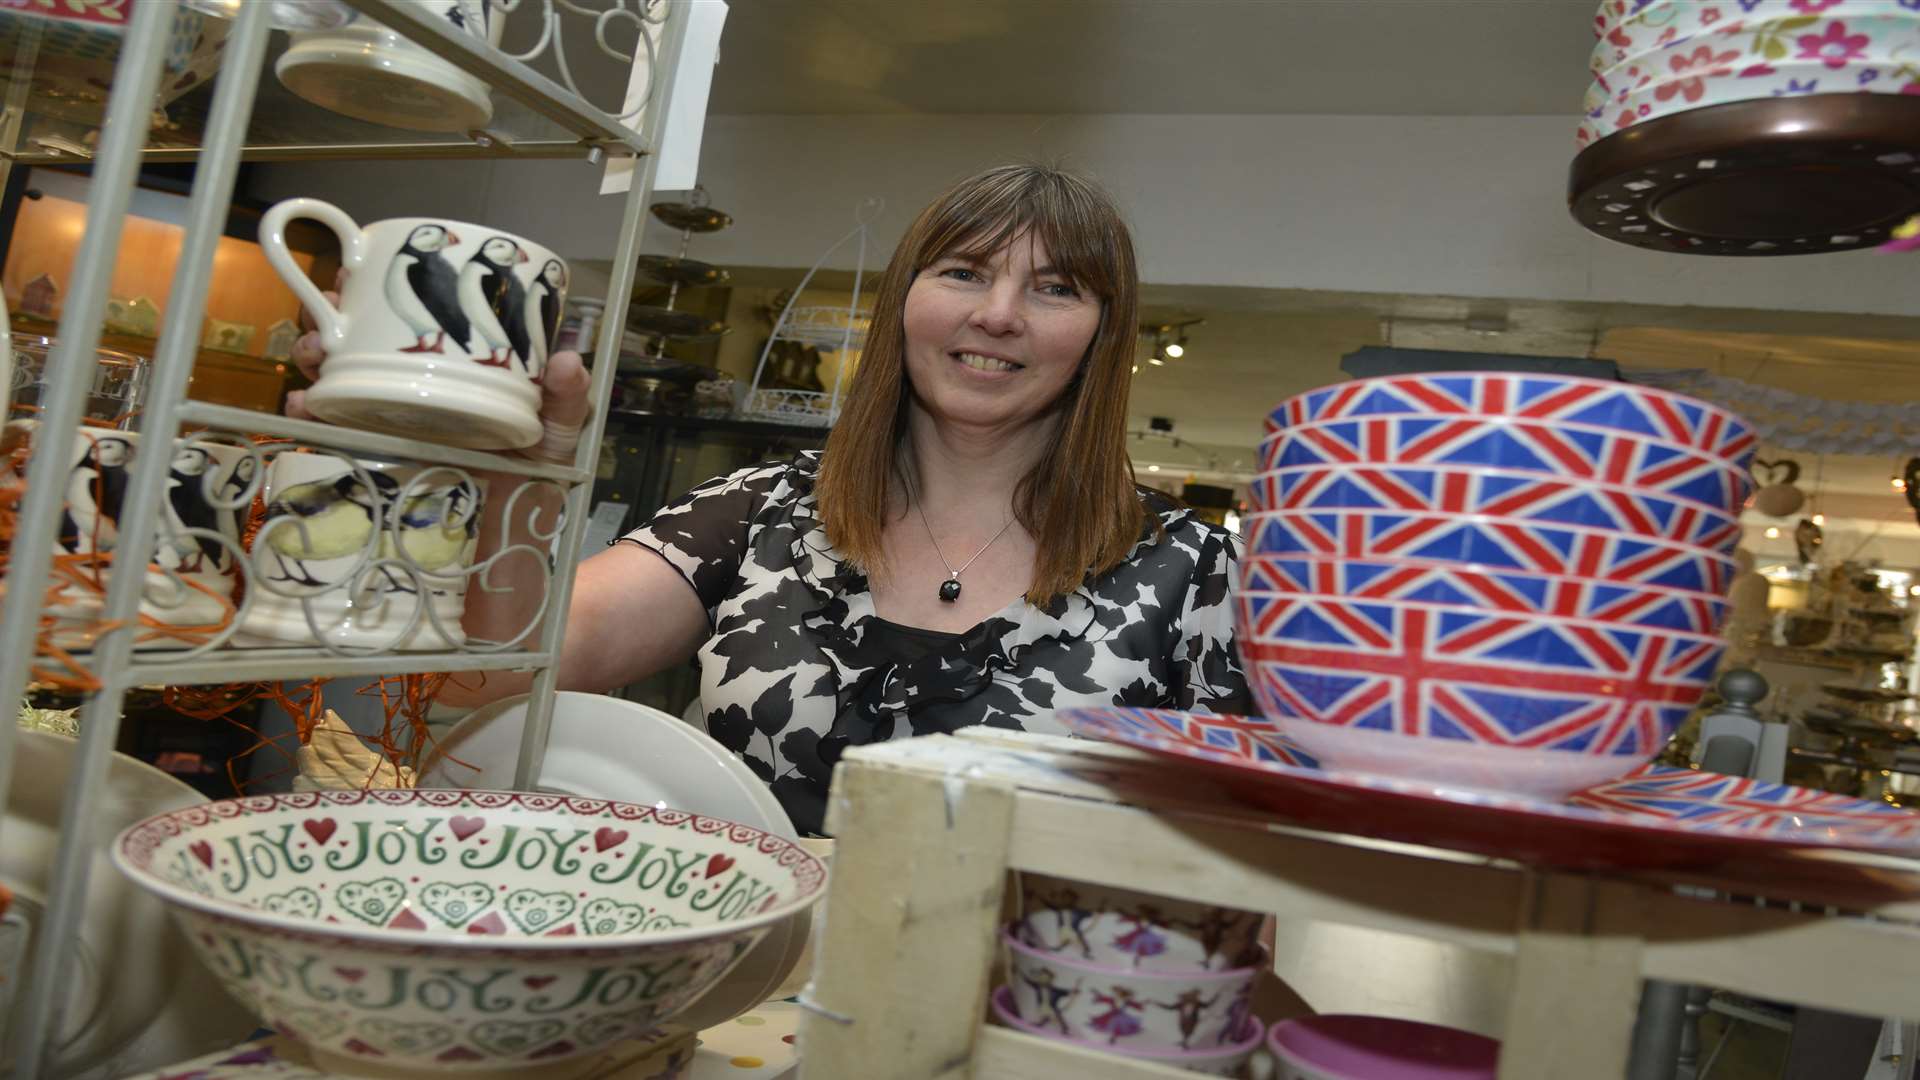 Owner of Harper's gift shop in Maidstone, Kate Joy, has